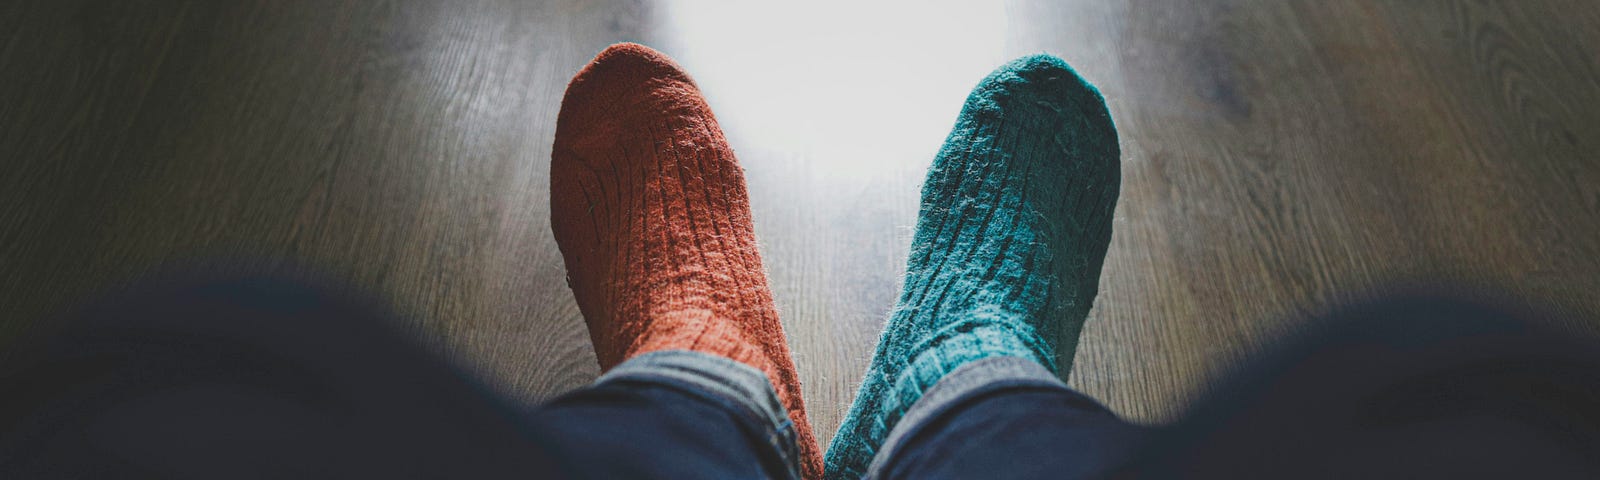 why parents should let their kids wear mismatched socks